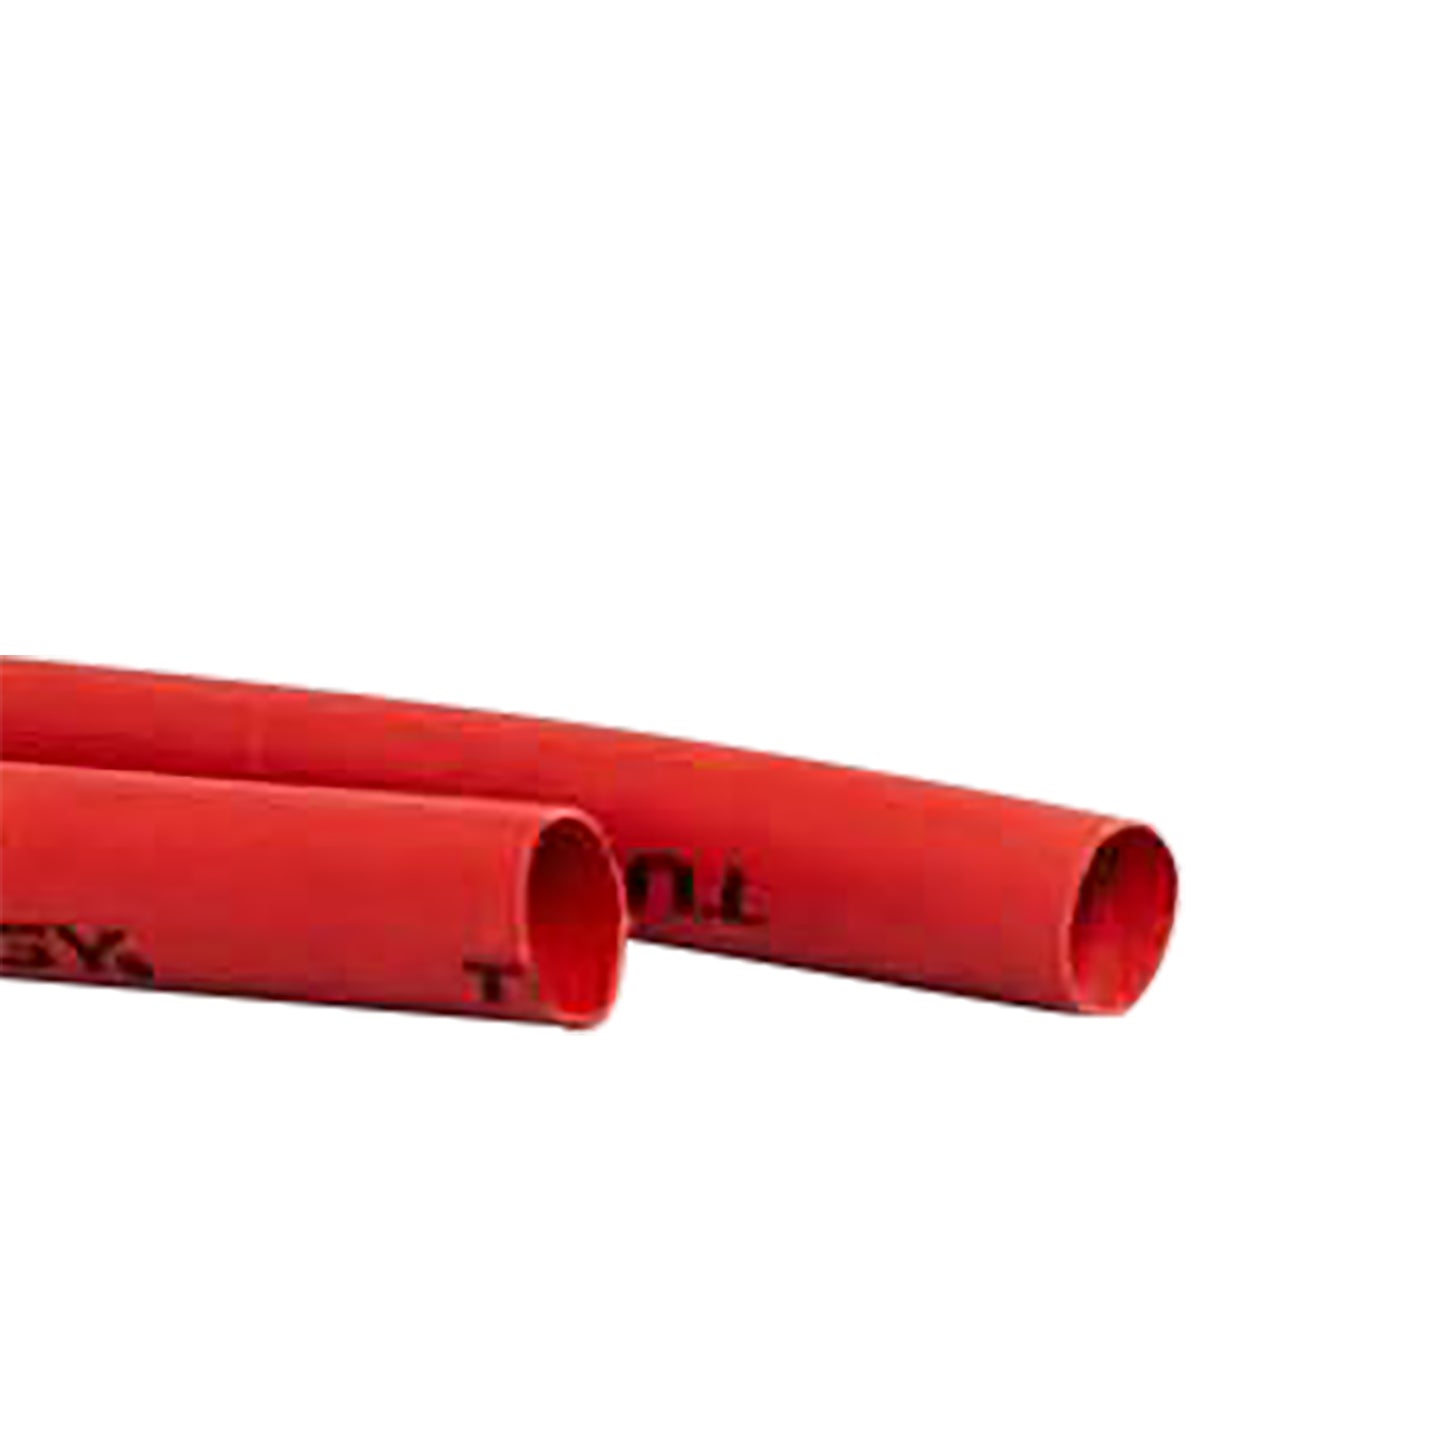 Flexible Thin Single Wall Non-Adhesive Heat Shrink Tubing 2:1 Red 3/8" ID - 25' Ft Spool